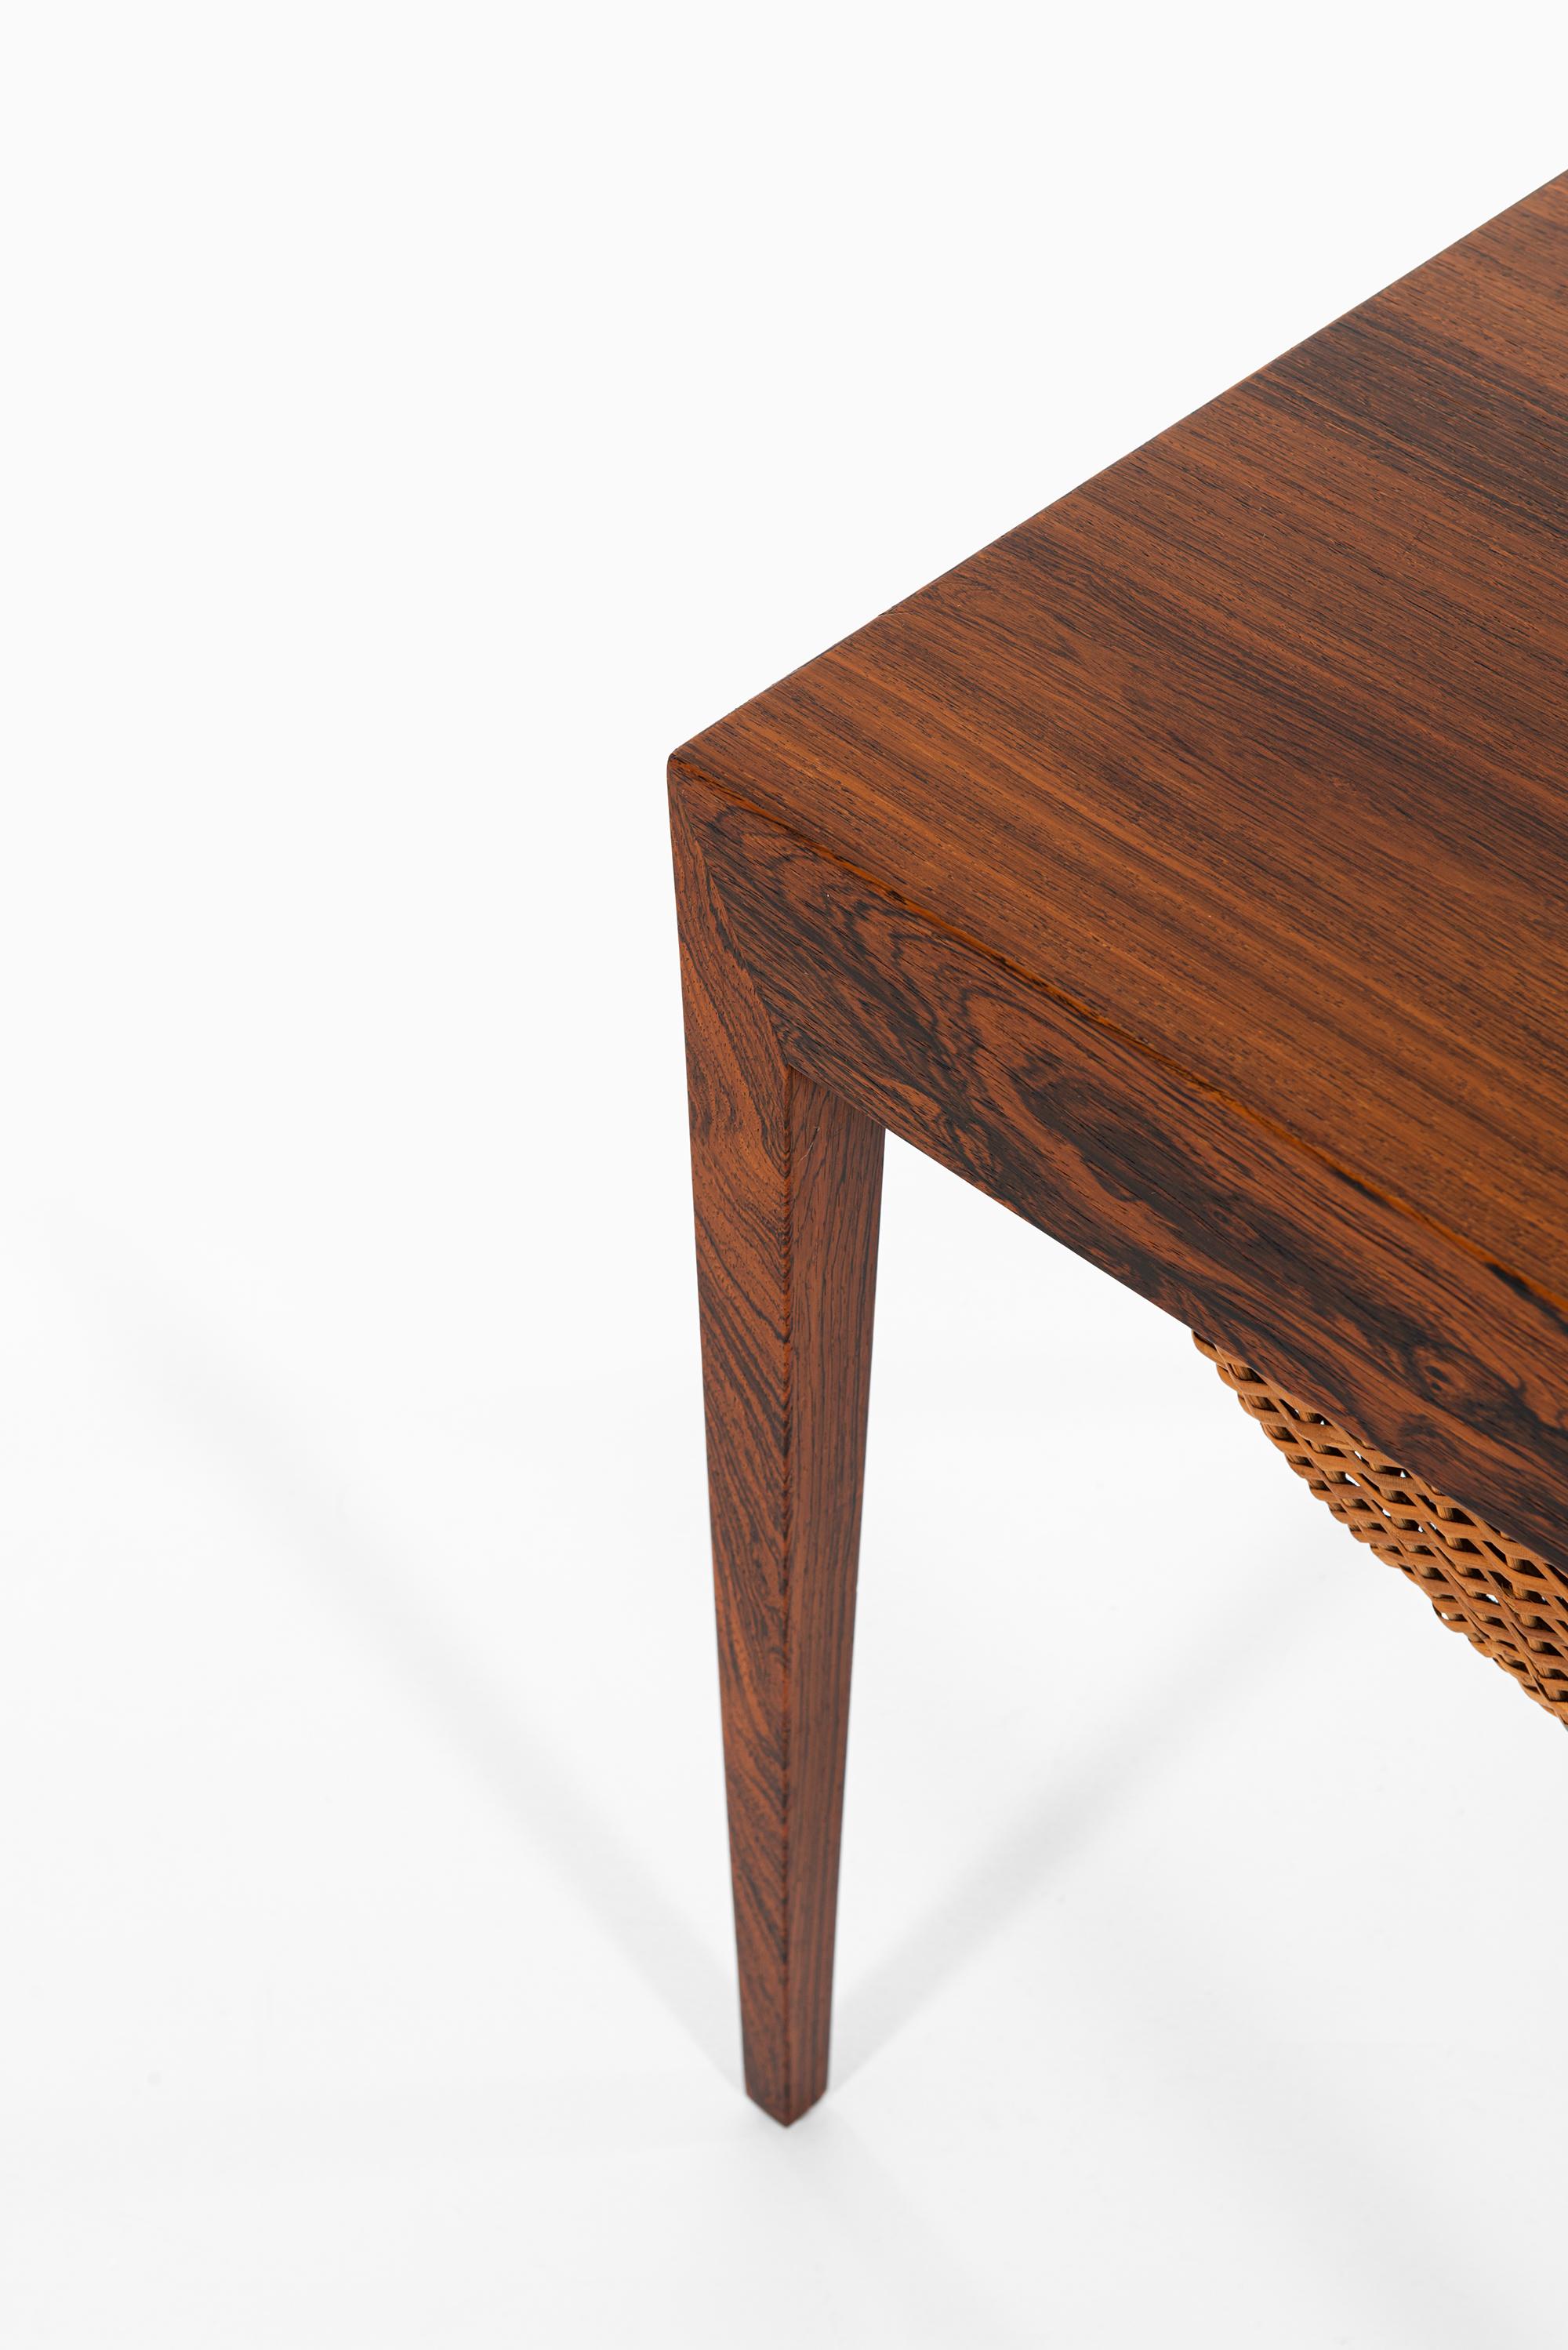 Side / sewing table designed by Severin Hansen. Produced by Haslev møbelsnedkeri in Denmark.